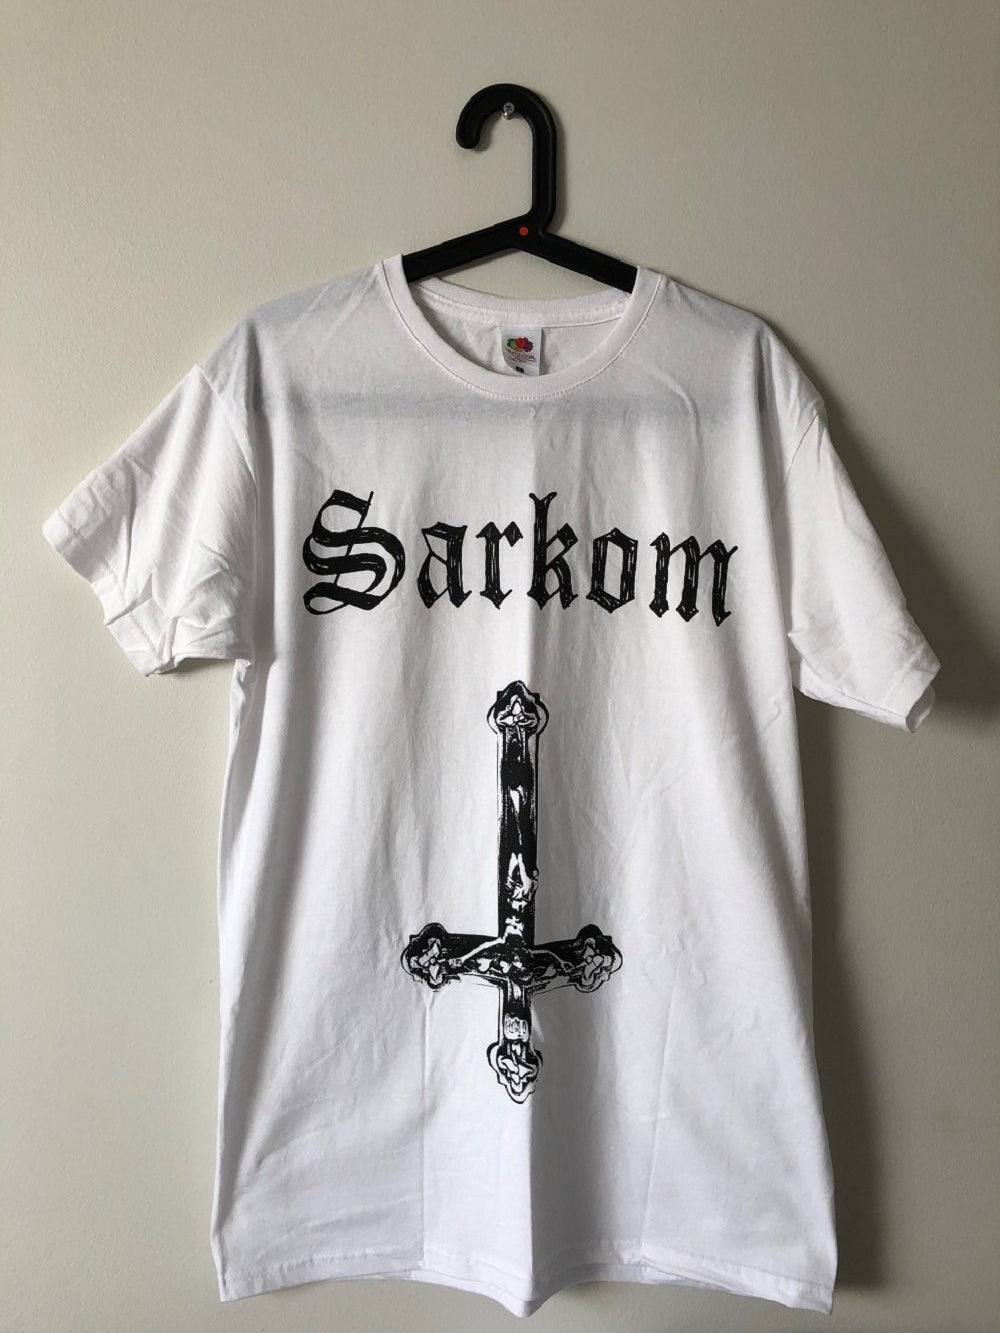 SARKOM - Inverted Cross (WHITE) T-SHIRT